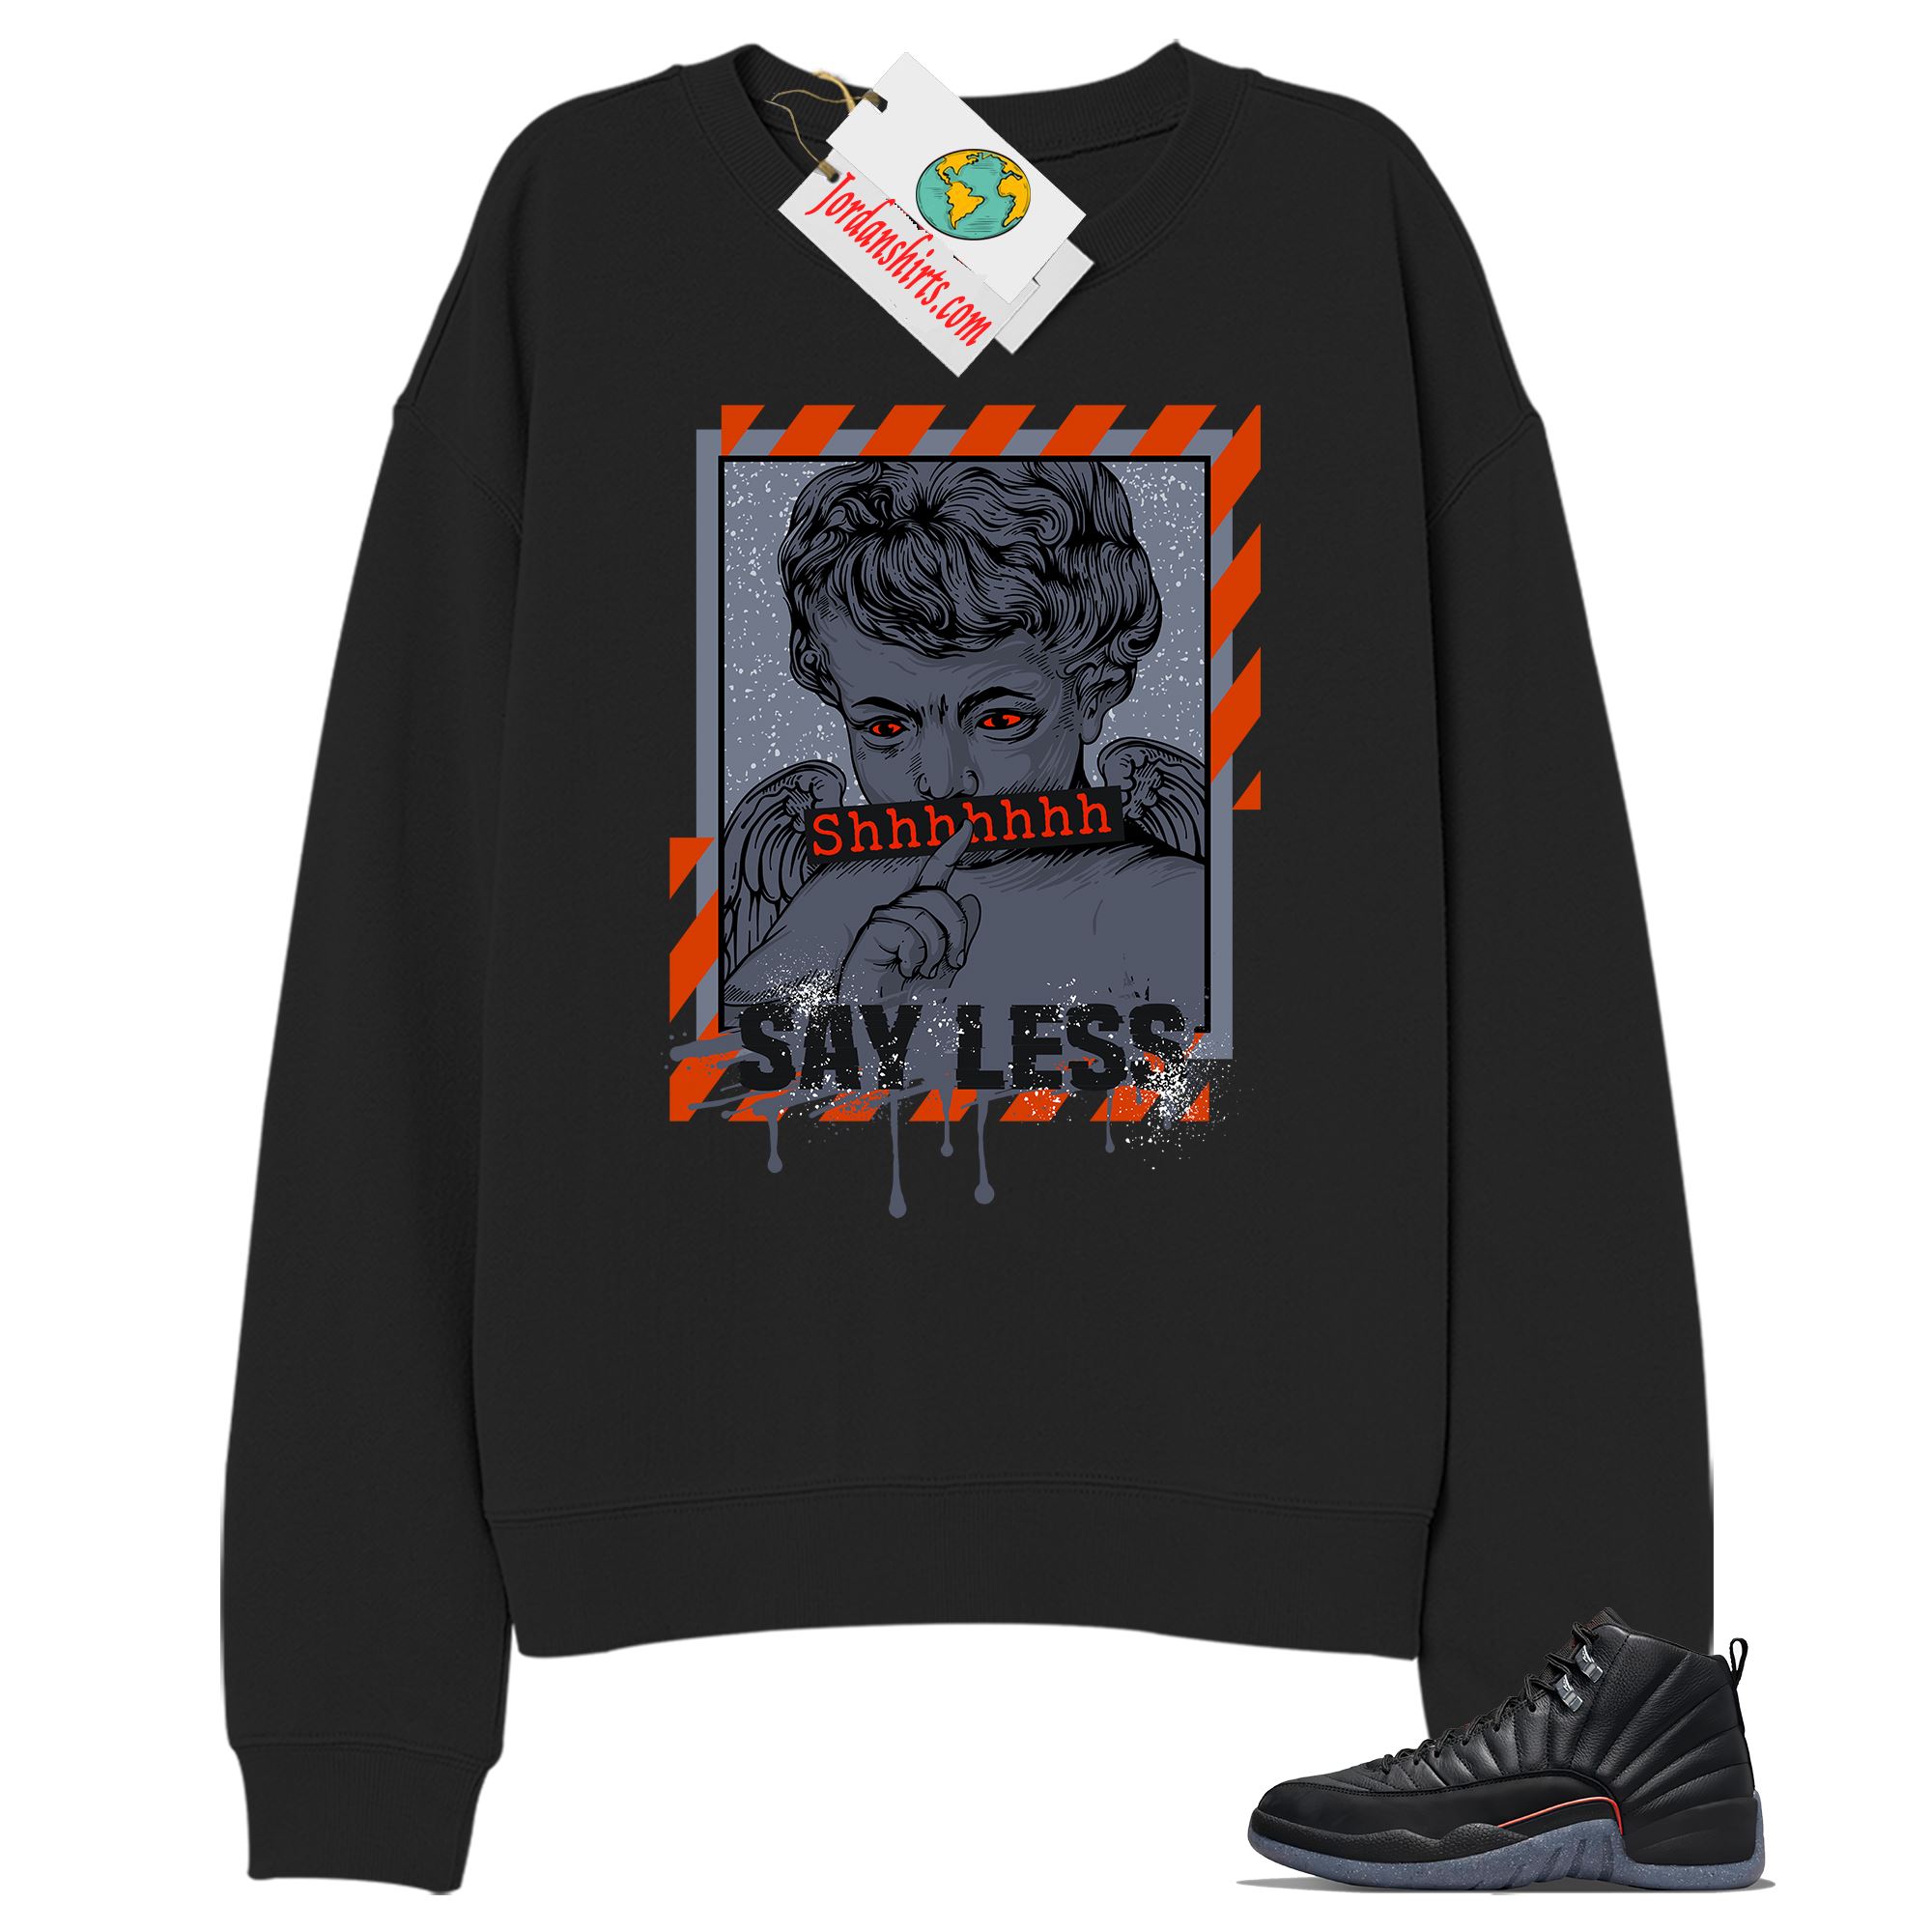 Jordan 12 Sweatshirt, Say Less Angel Black Sweatshirt Air Jordan 12 Utility Grind 12s Plus Size Up To 5xl